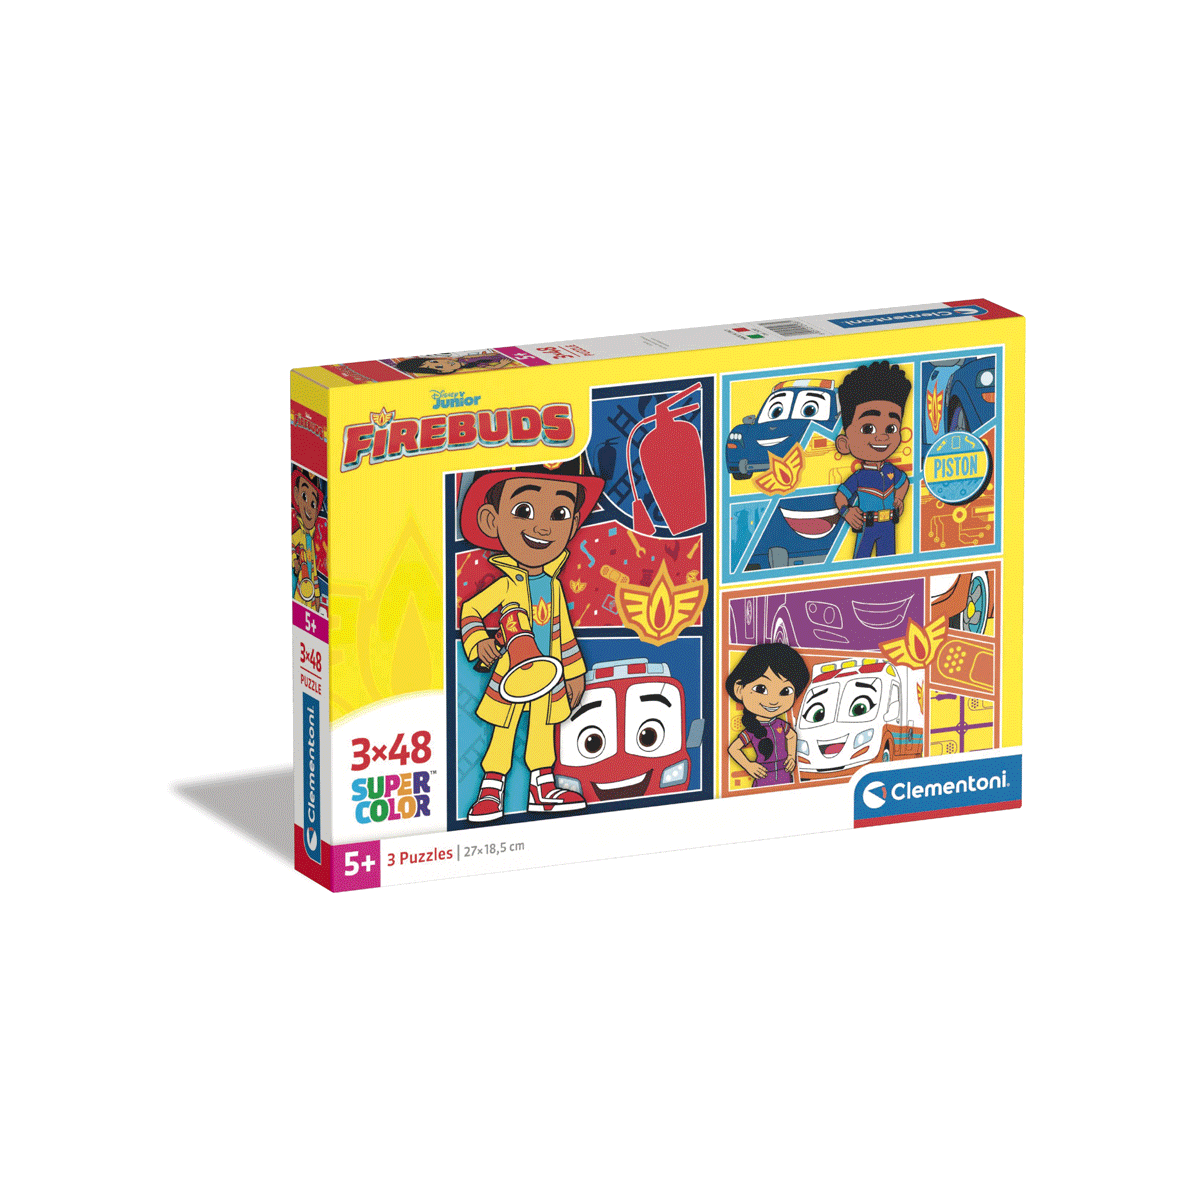 Clementoni supercolor puzzle - disney firebuds - 3x48 pezzi, puzzle bambini 5 anni - CLEMENTONI